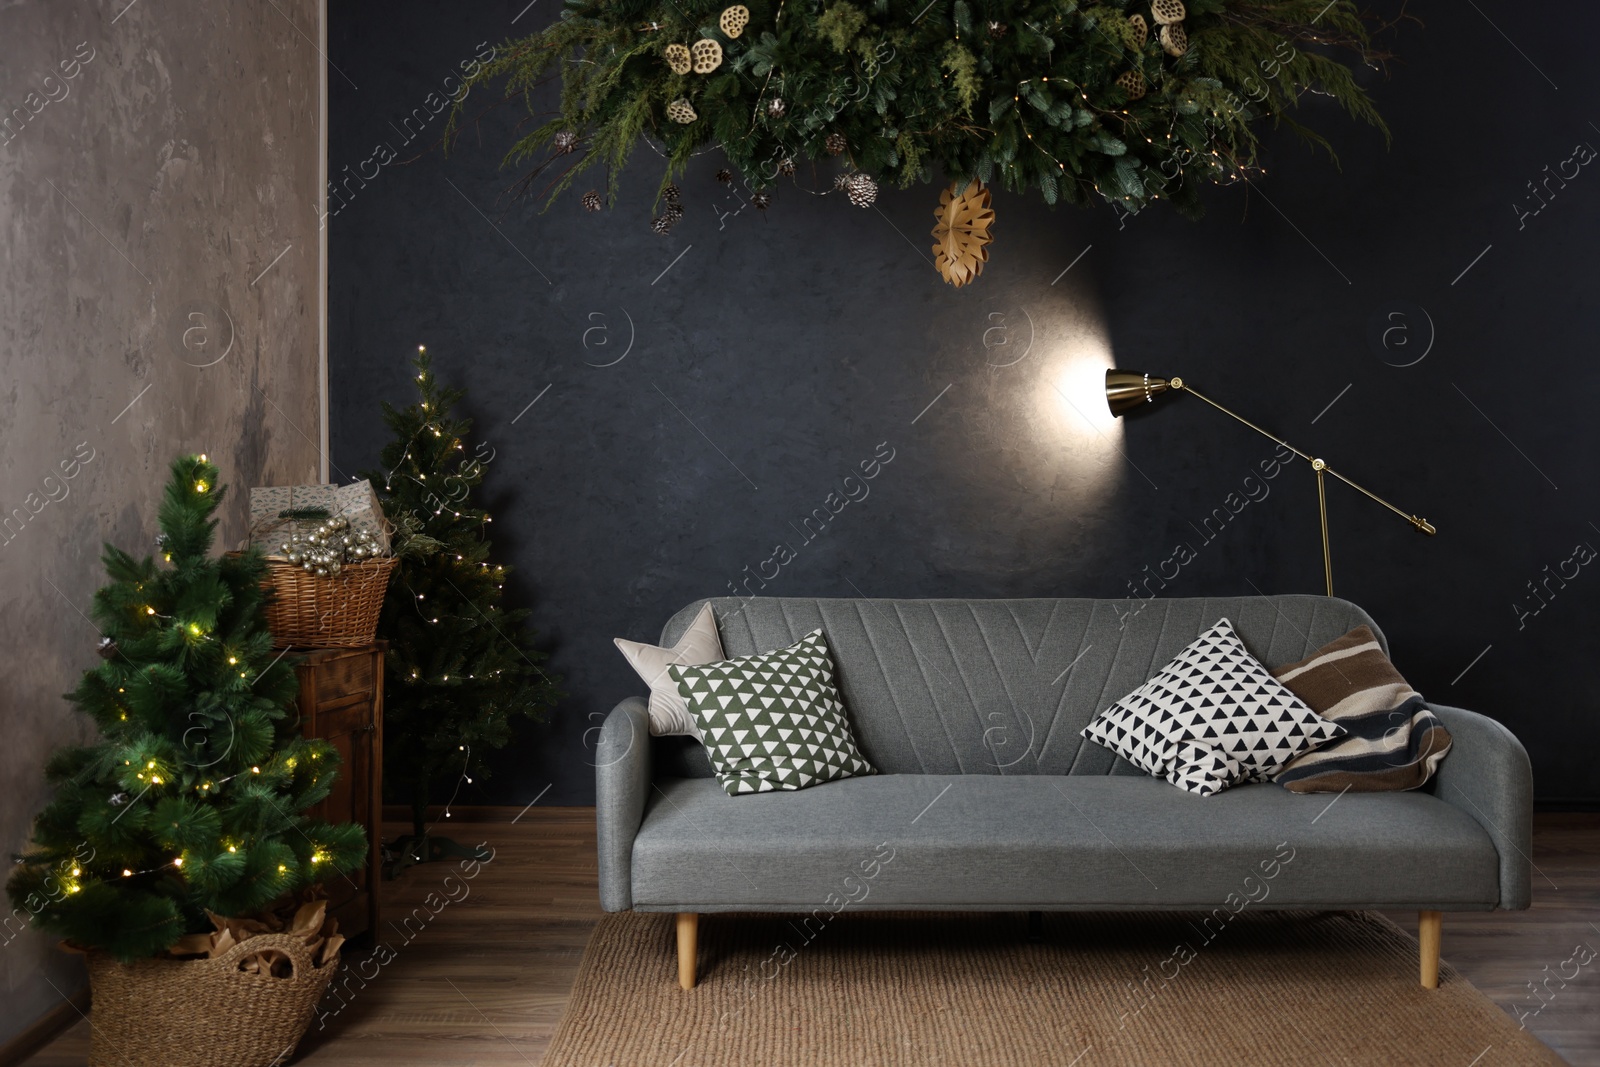 Photo of Stylish living room with comfortable sofa and Christmas trees. Interior design